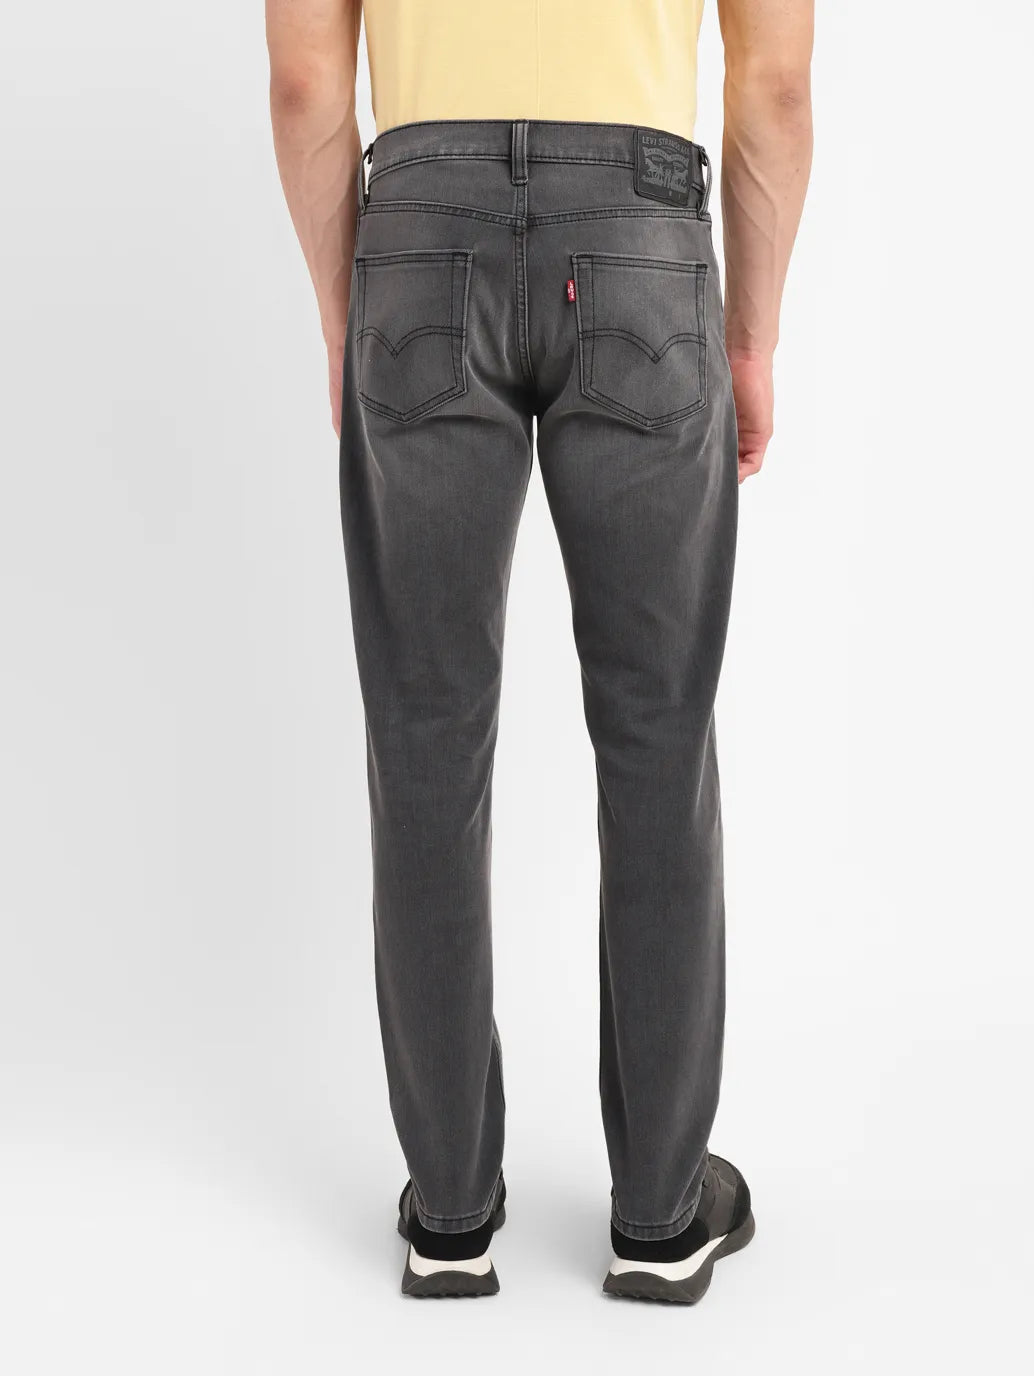 Men's 513 Grey Slim Fit Jeans